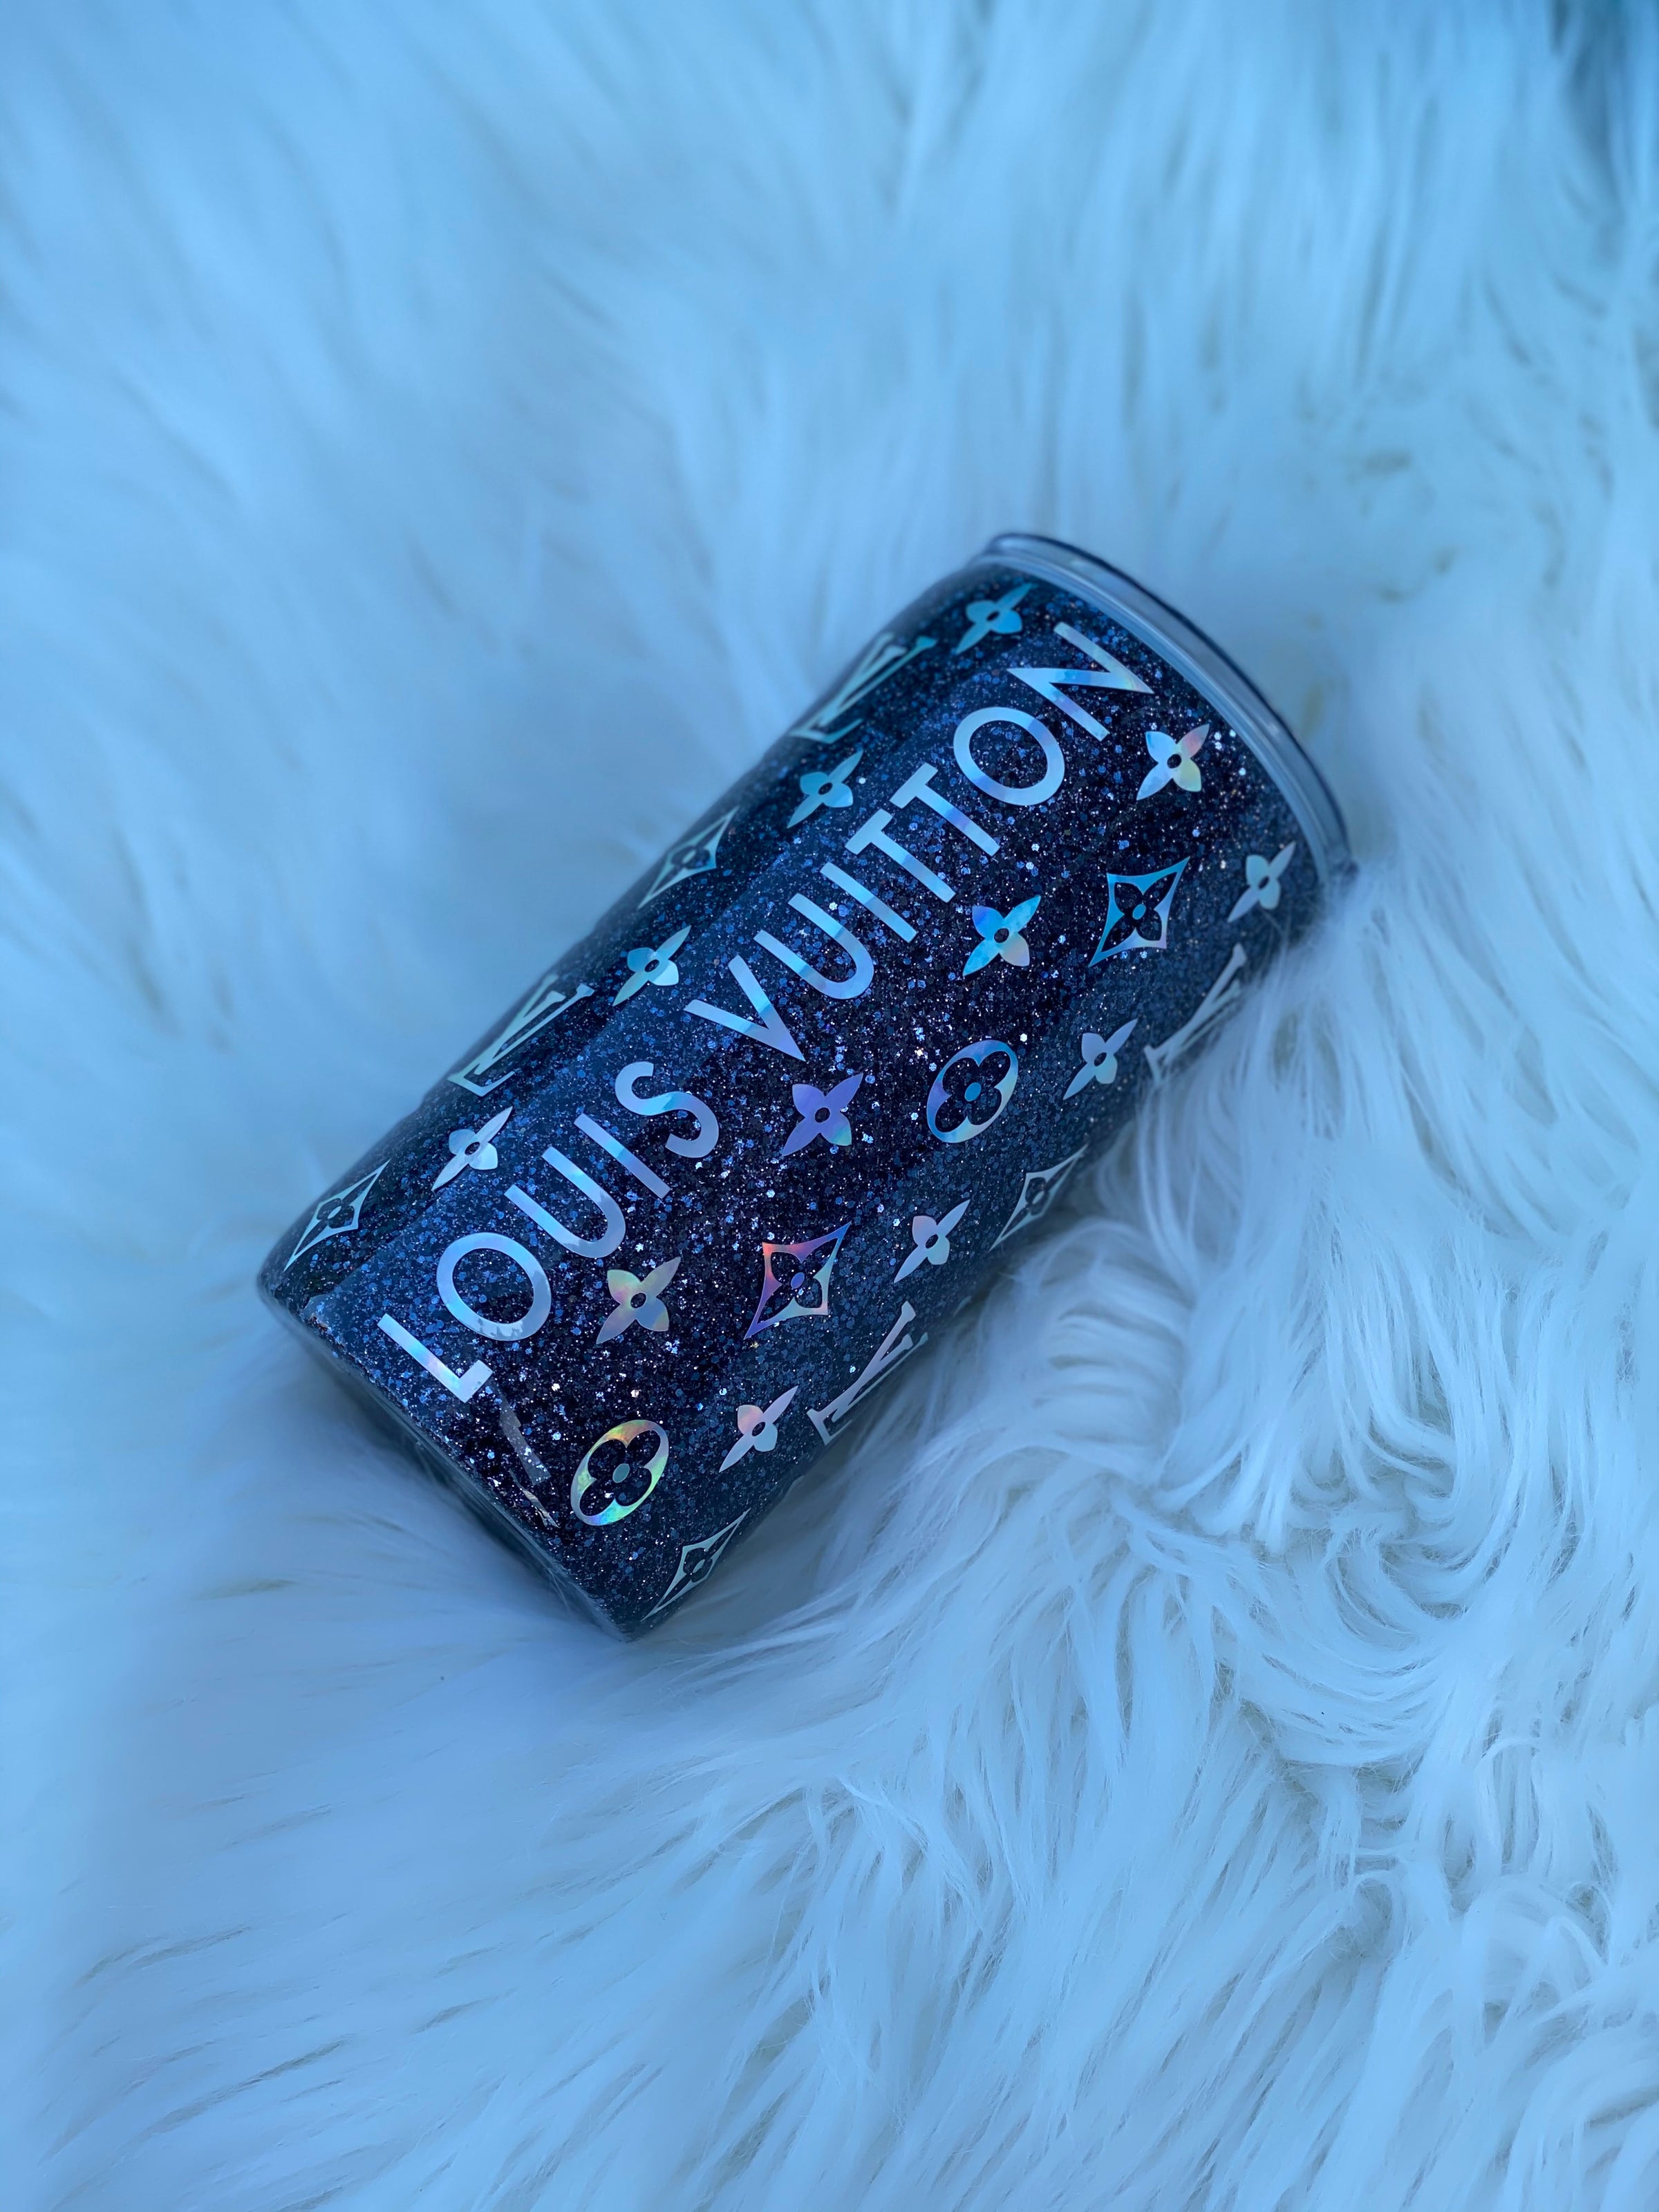 Louis Vuitton inspired glitter tumbler